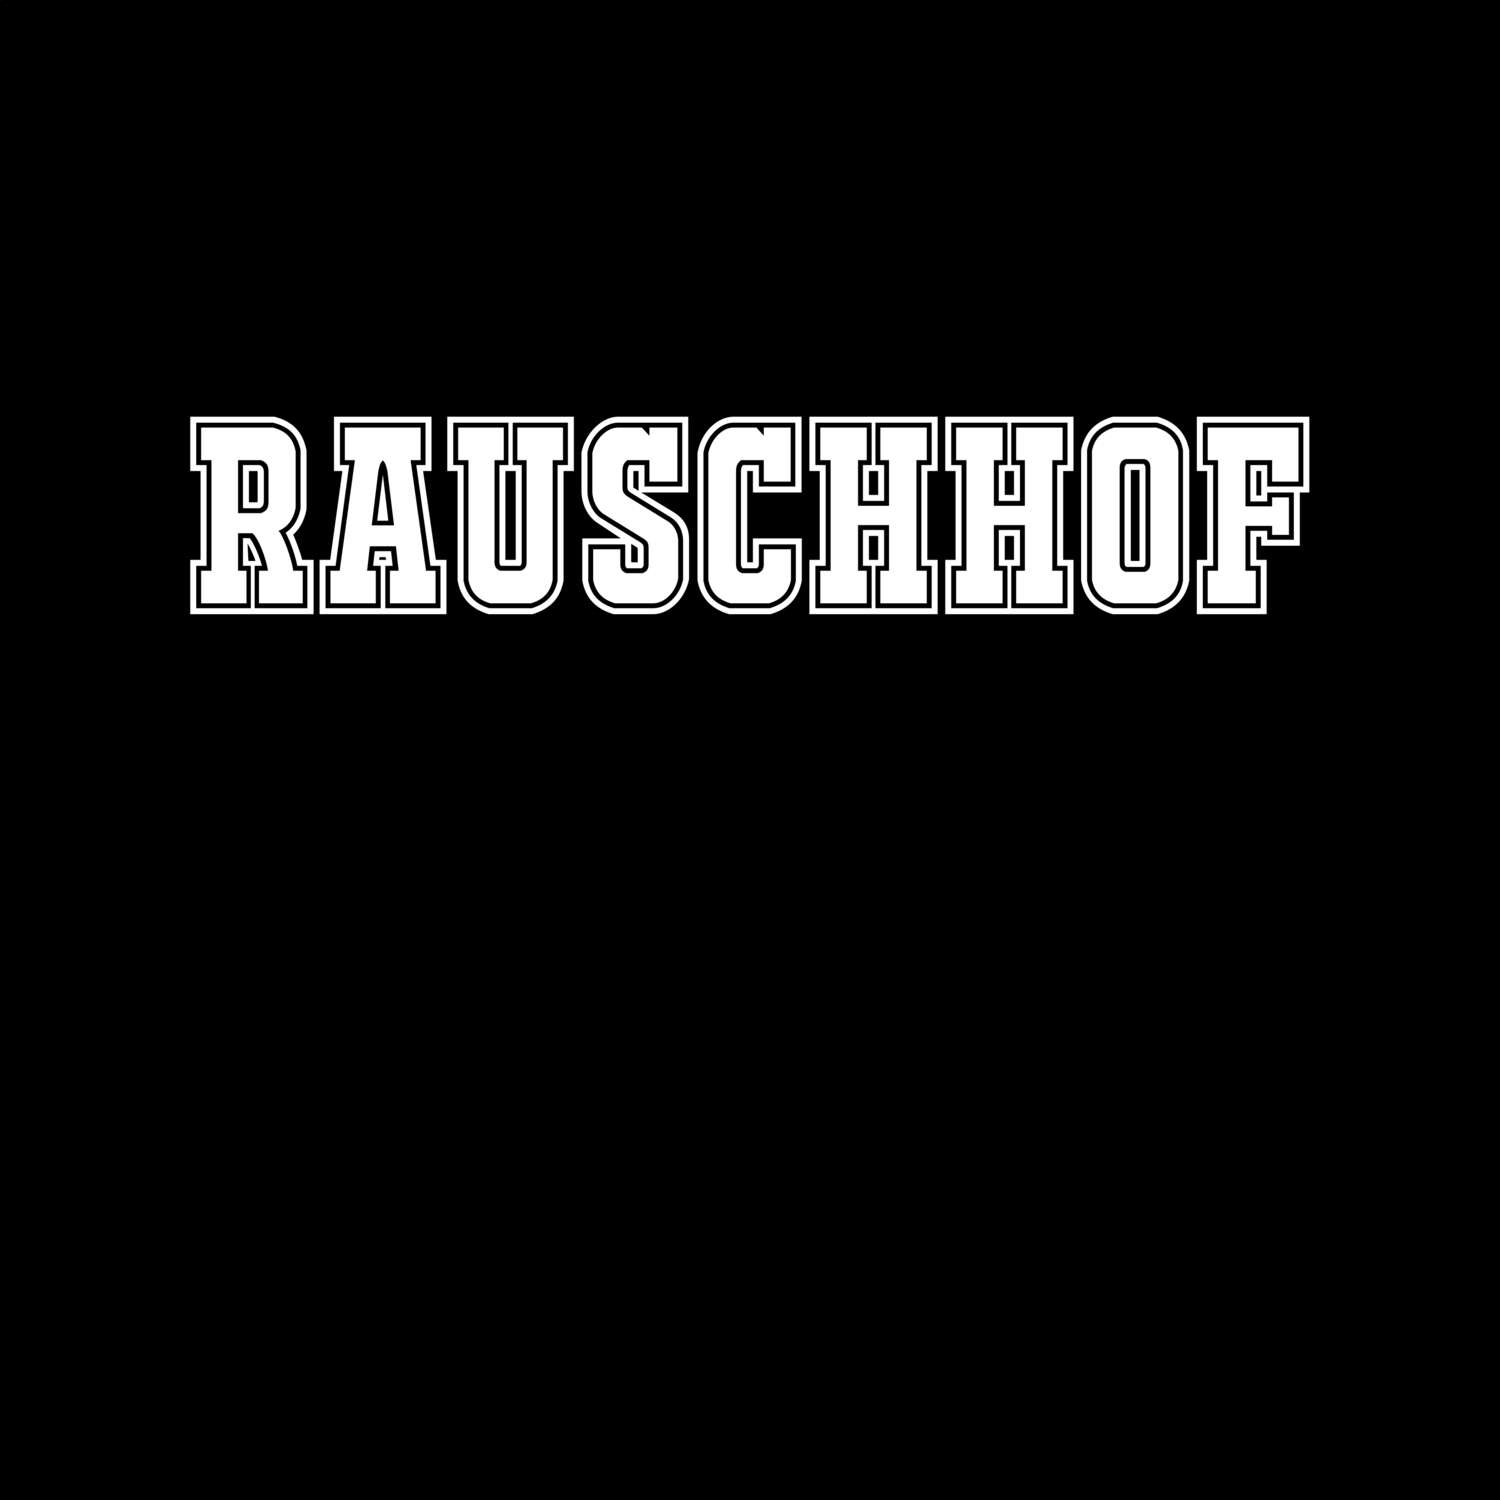 Rauschhof T-Shirt »Classic«